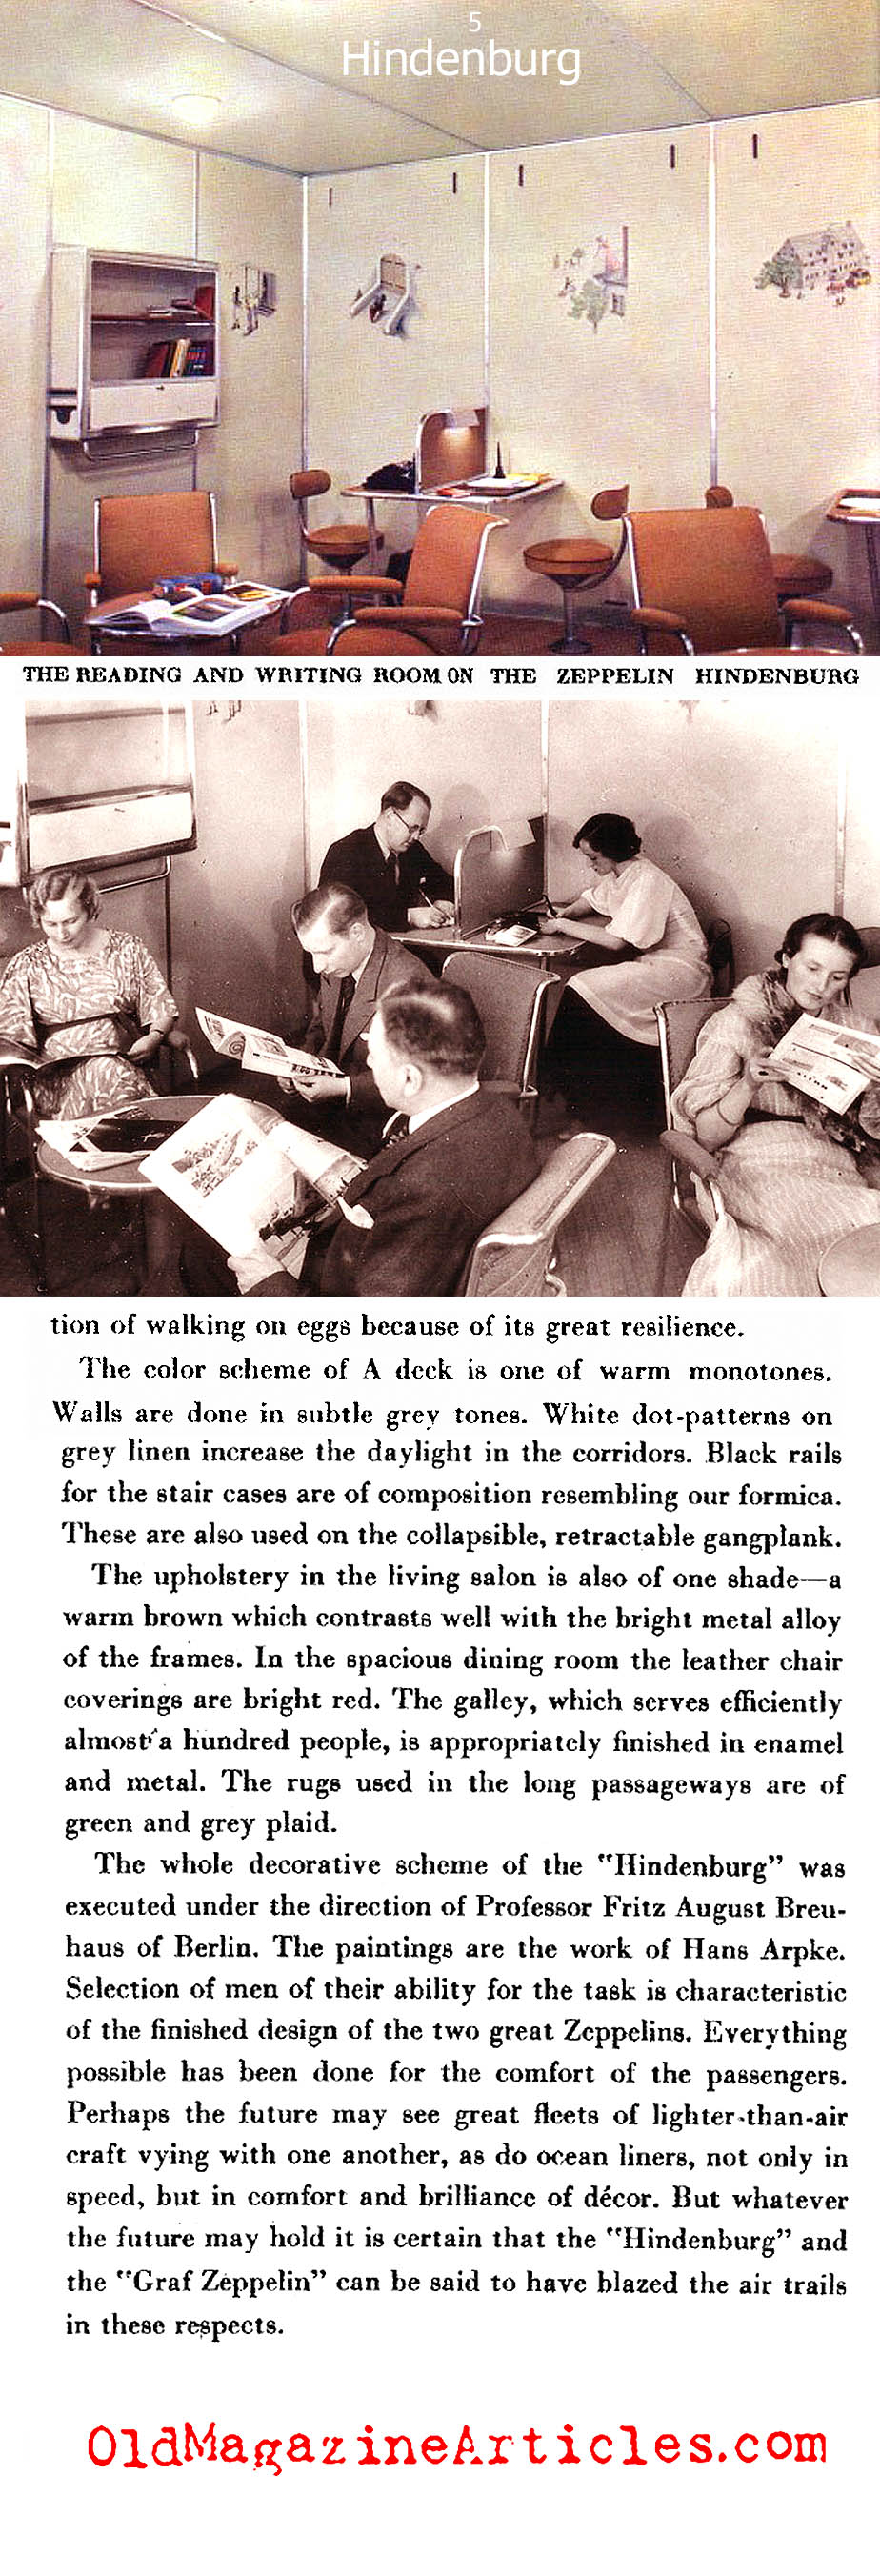 The Interior Design of the <i>Hindenburg'</i> (Creative Art Magazine, 1937)